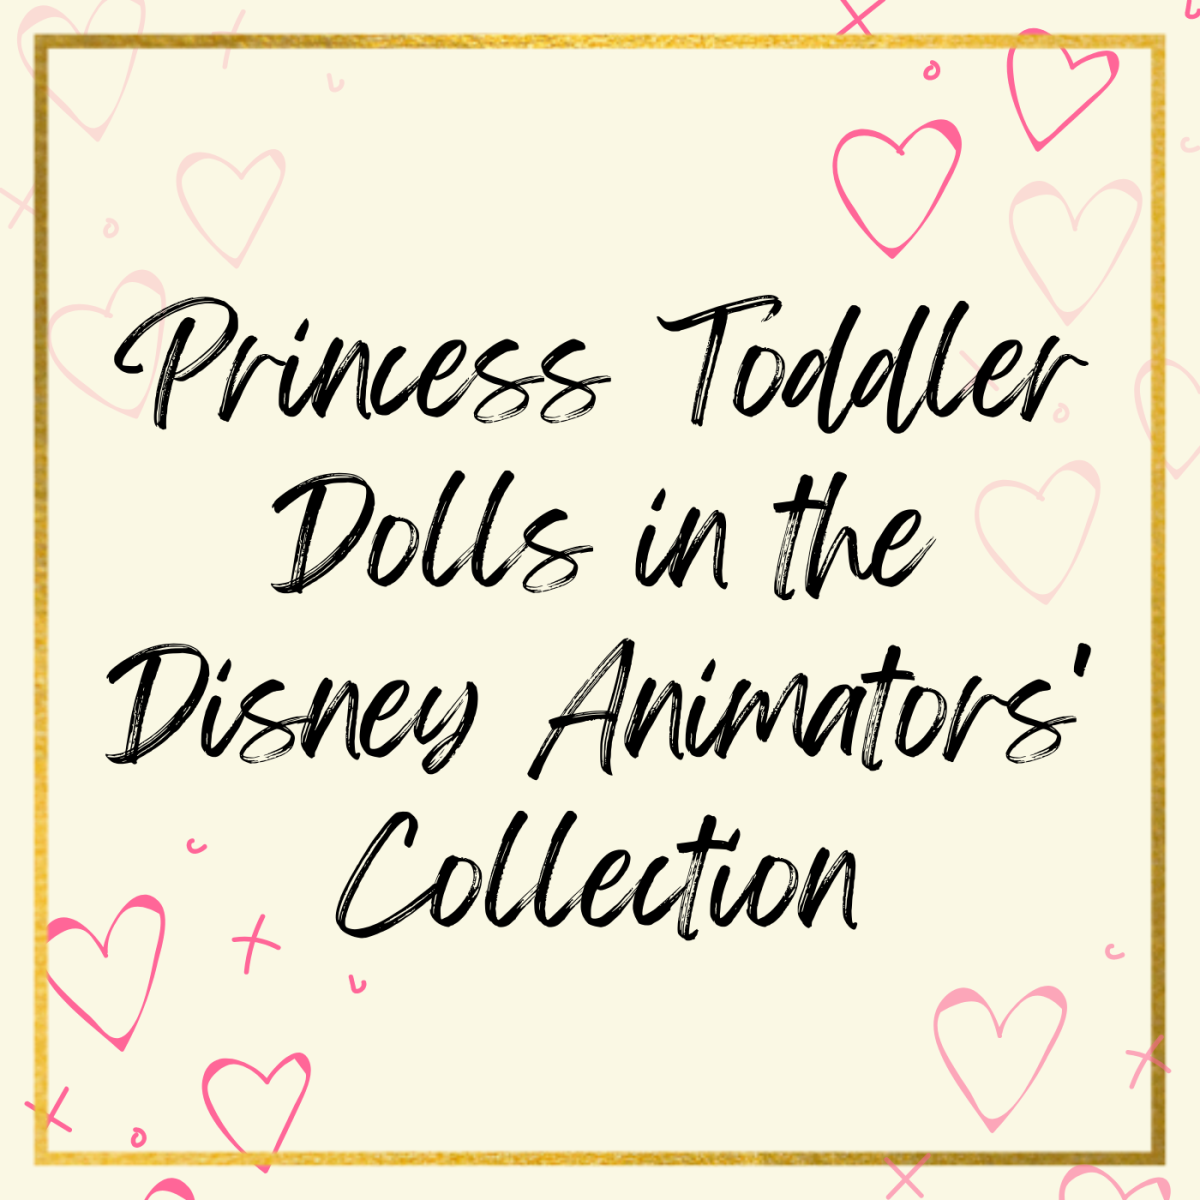 Disney Animators' Collection: Princess Toddler Dolls